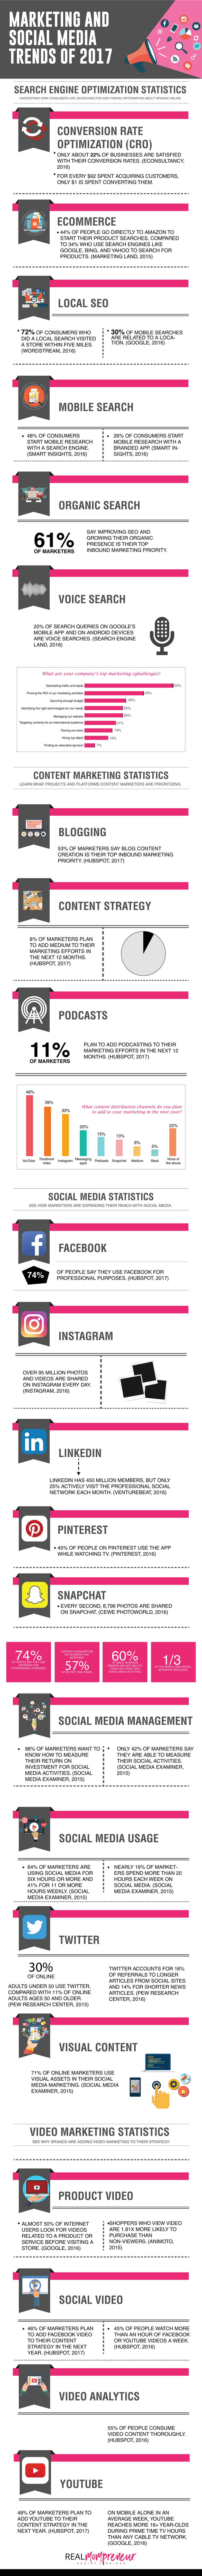 Marketing and Social Media Trends 2017